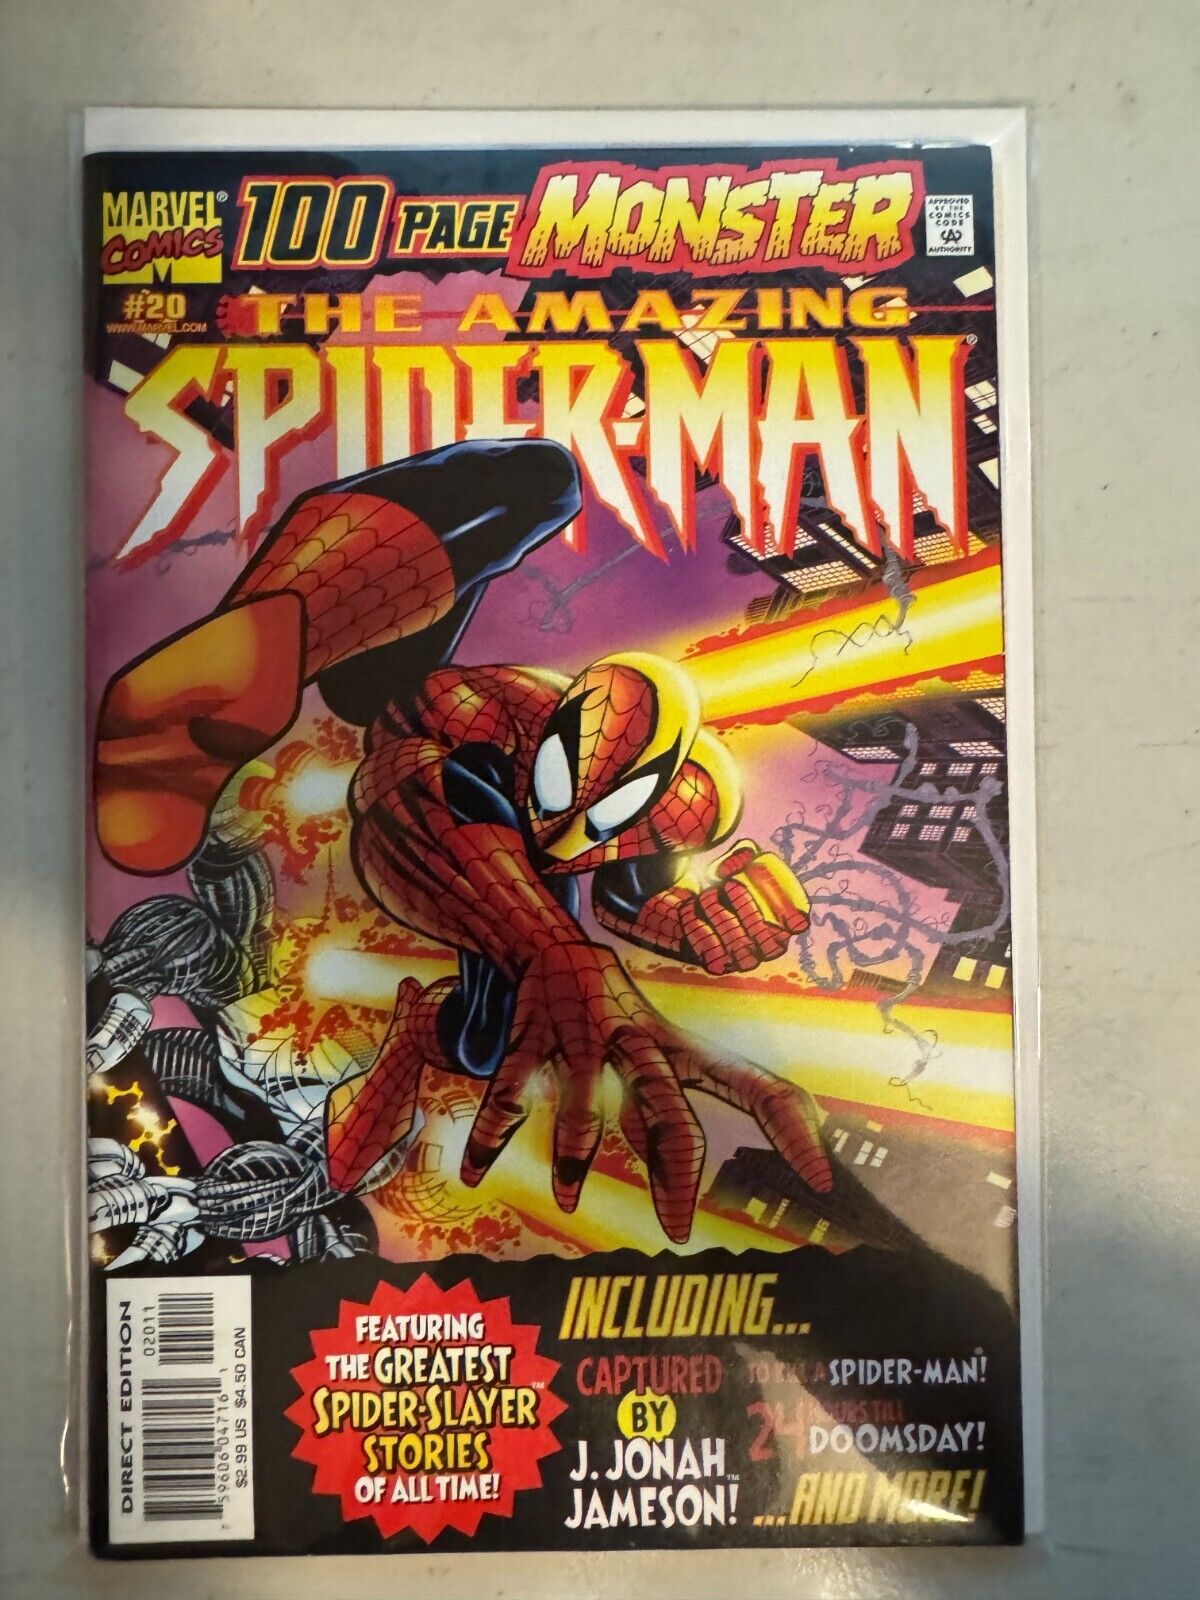 Amazing Spider-Man #20 - Volume 2 - 100 Page Monster - 2000 - Marvel - NM